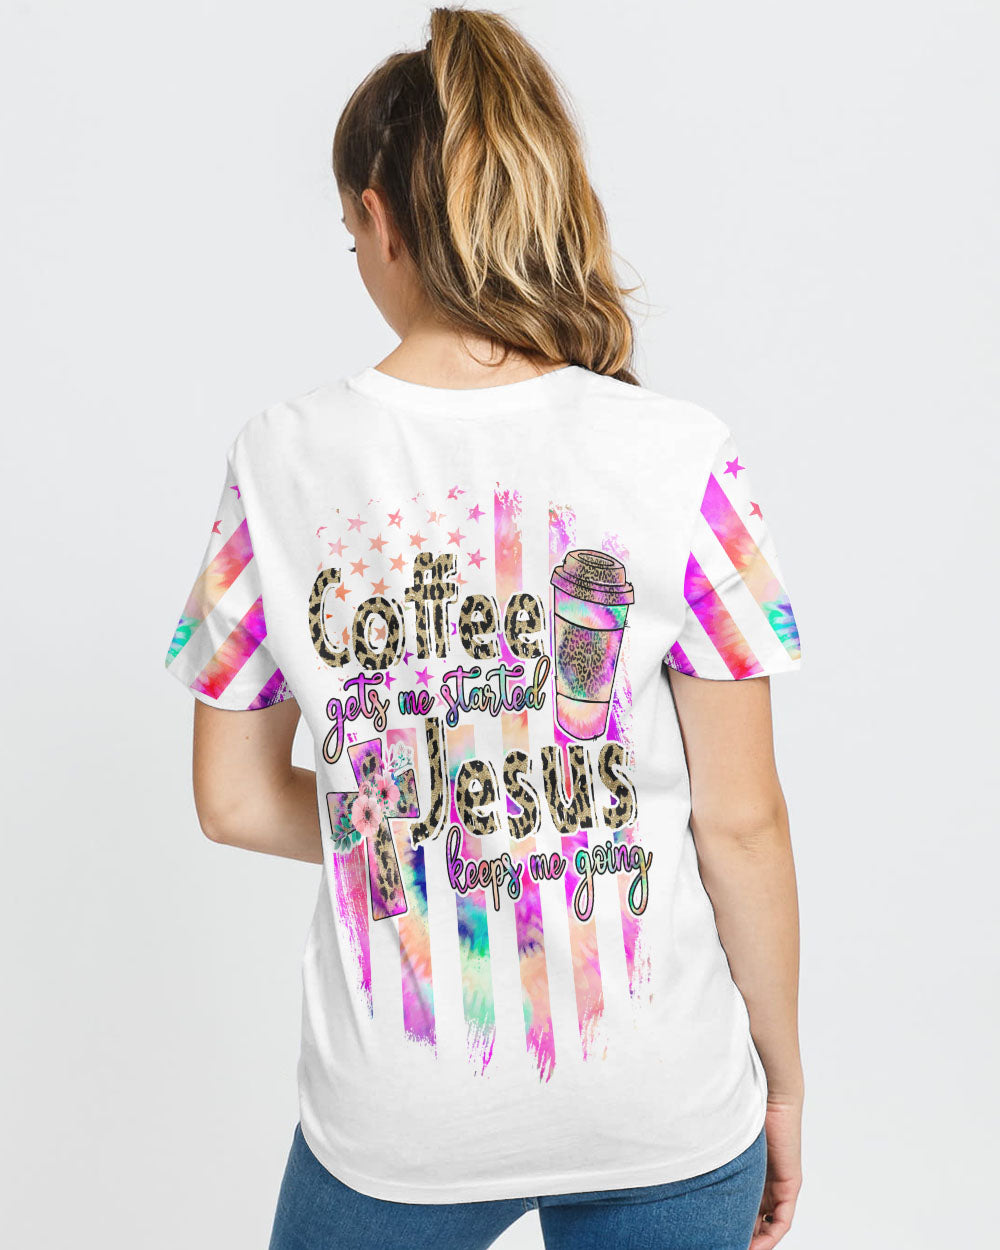 Coffee Gets Me Started Jesus Keeps Me Going Colorful Cross Faith Flag Tie Dye Women's Christian Tshirt